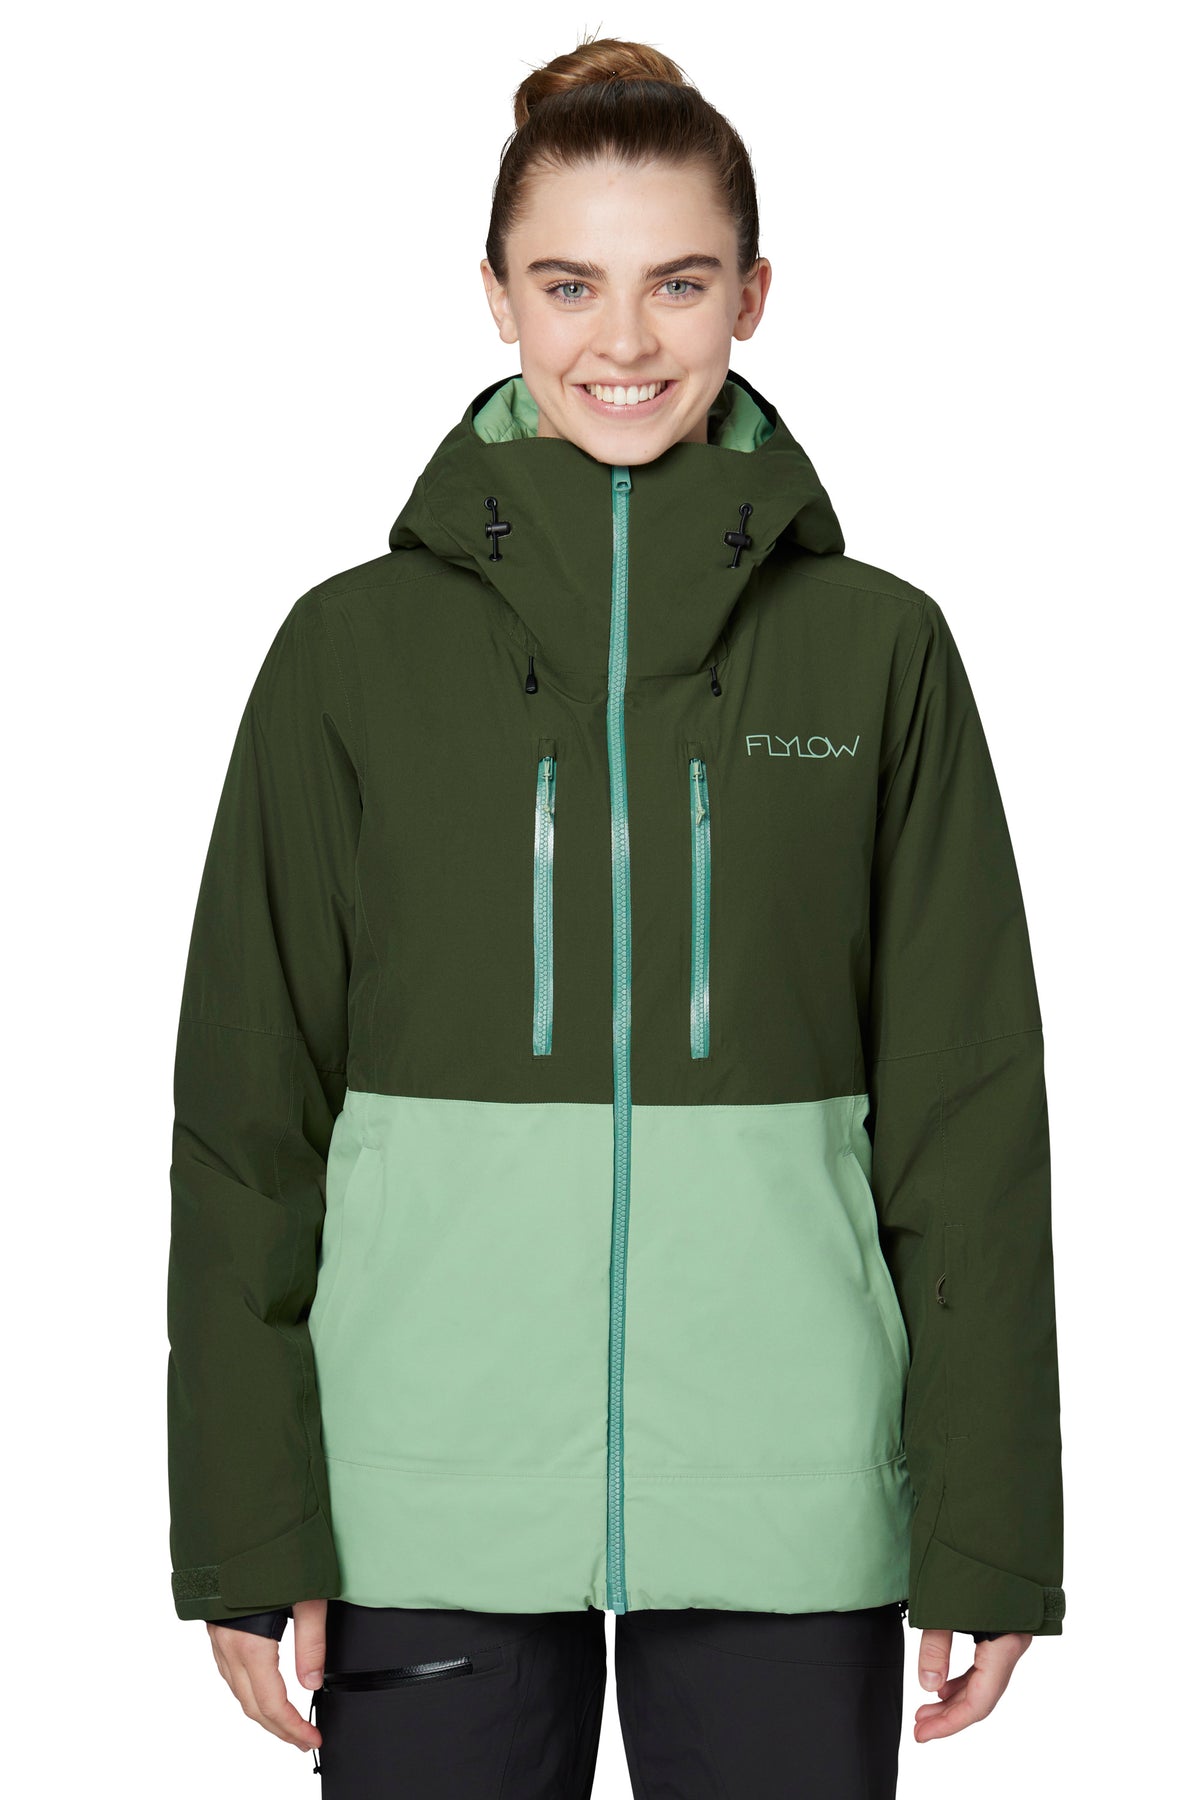 Avery Jacket - Women's Shell Ski Jacket | Flylow – Flylow Gear